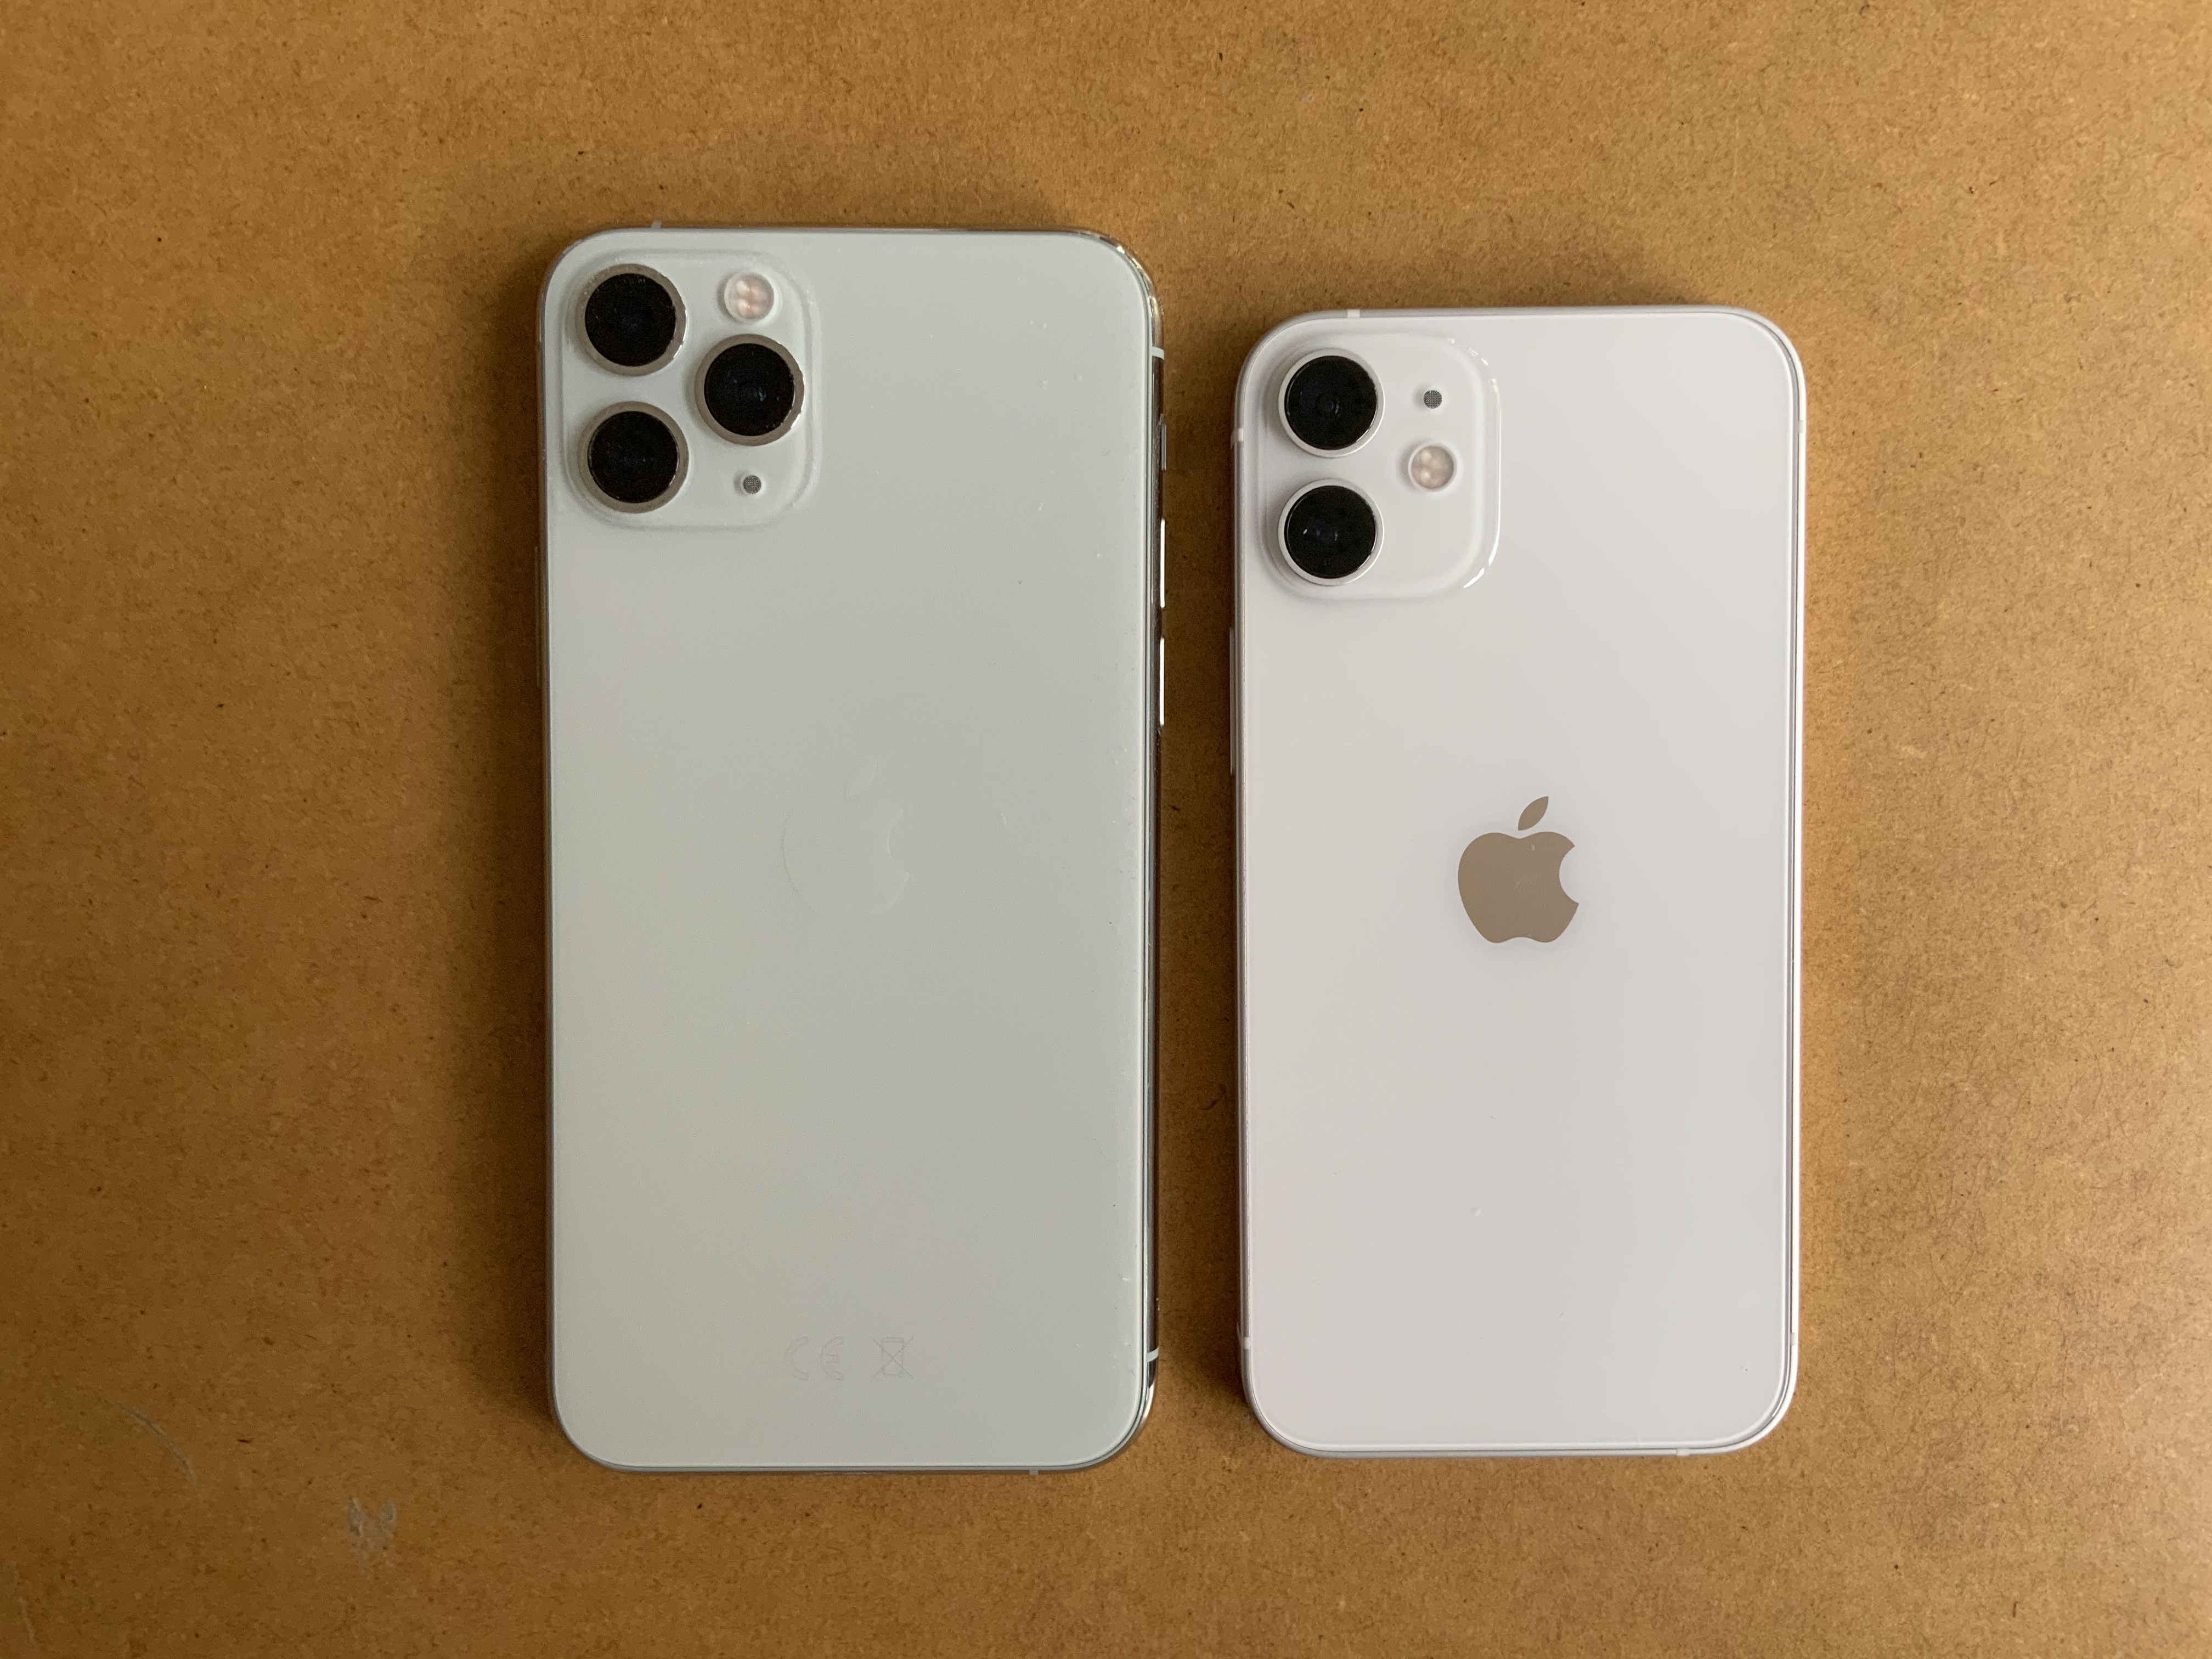 iPhone 11 Pro vs iPhone 12 mini